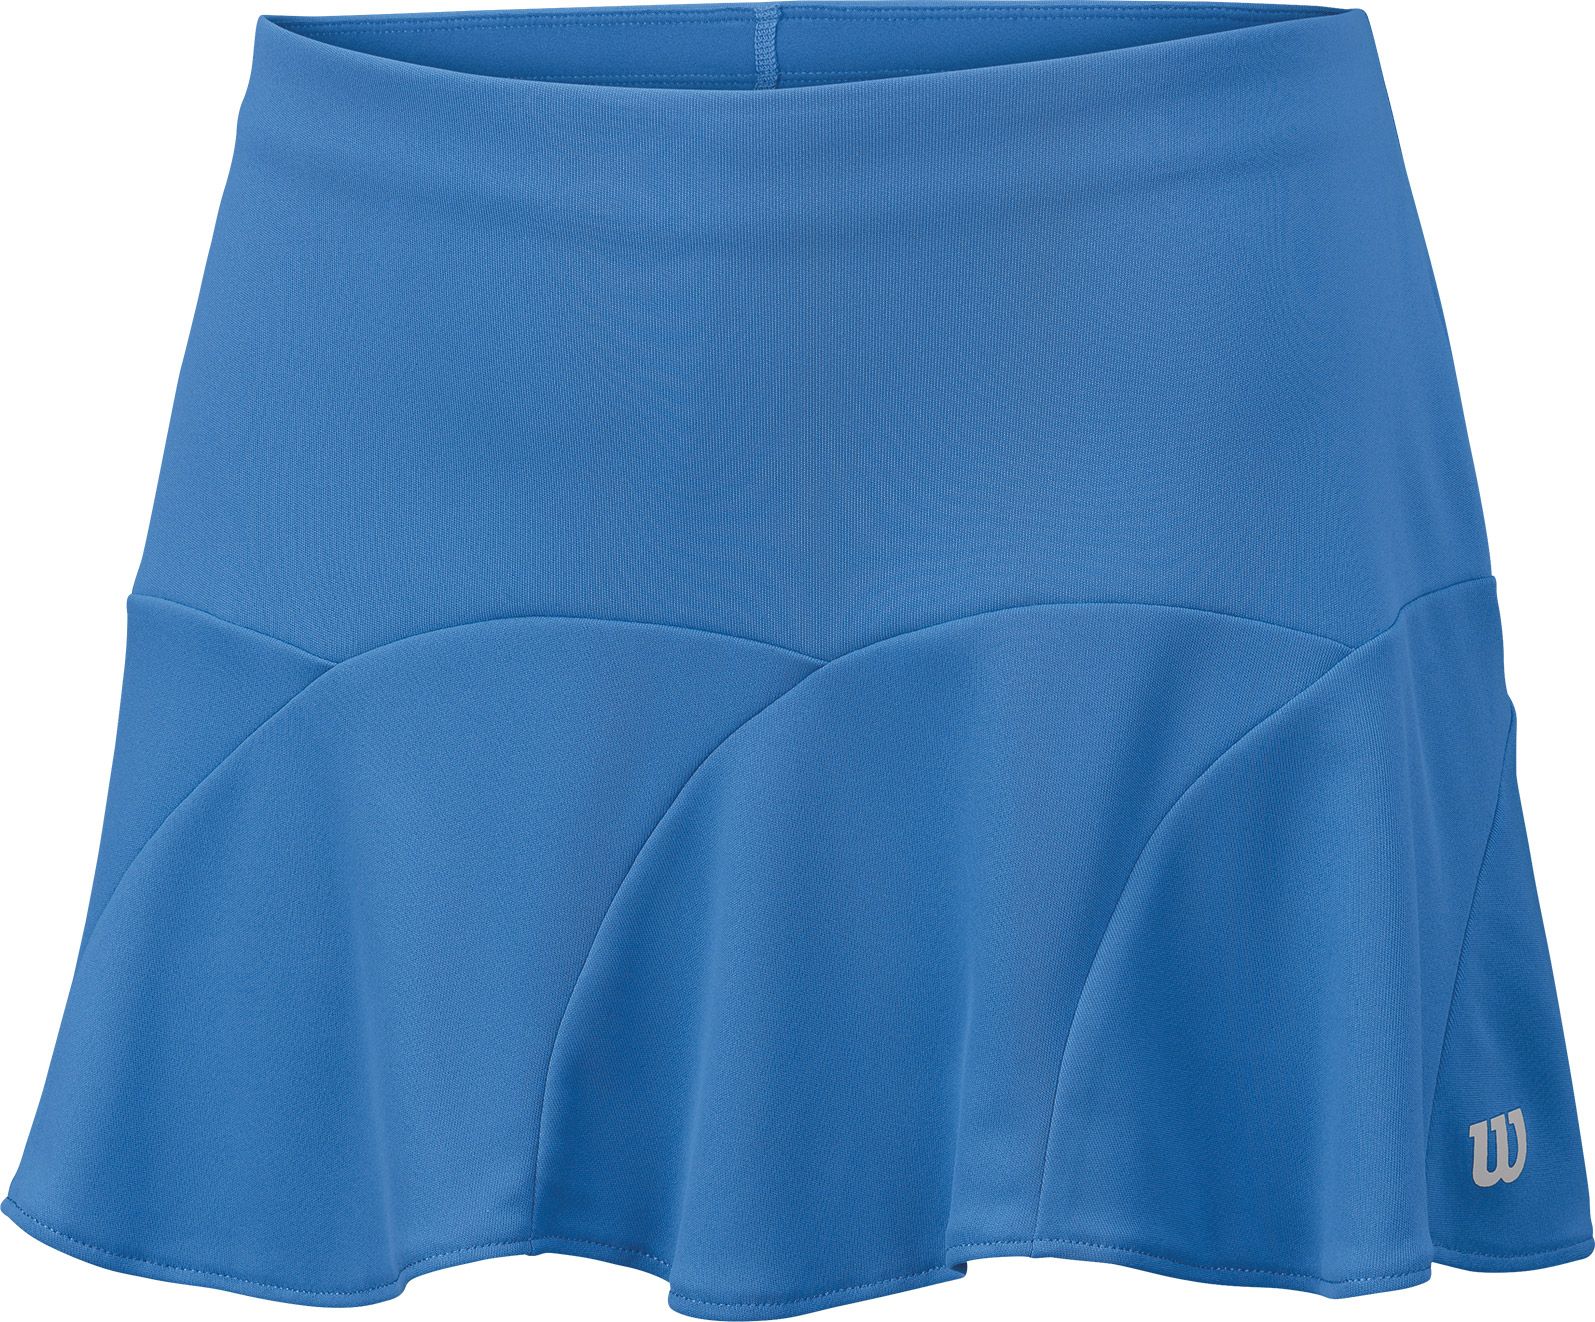 Tennis Skirts | DICK'S Sporting Goods